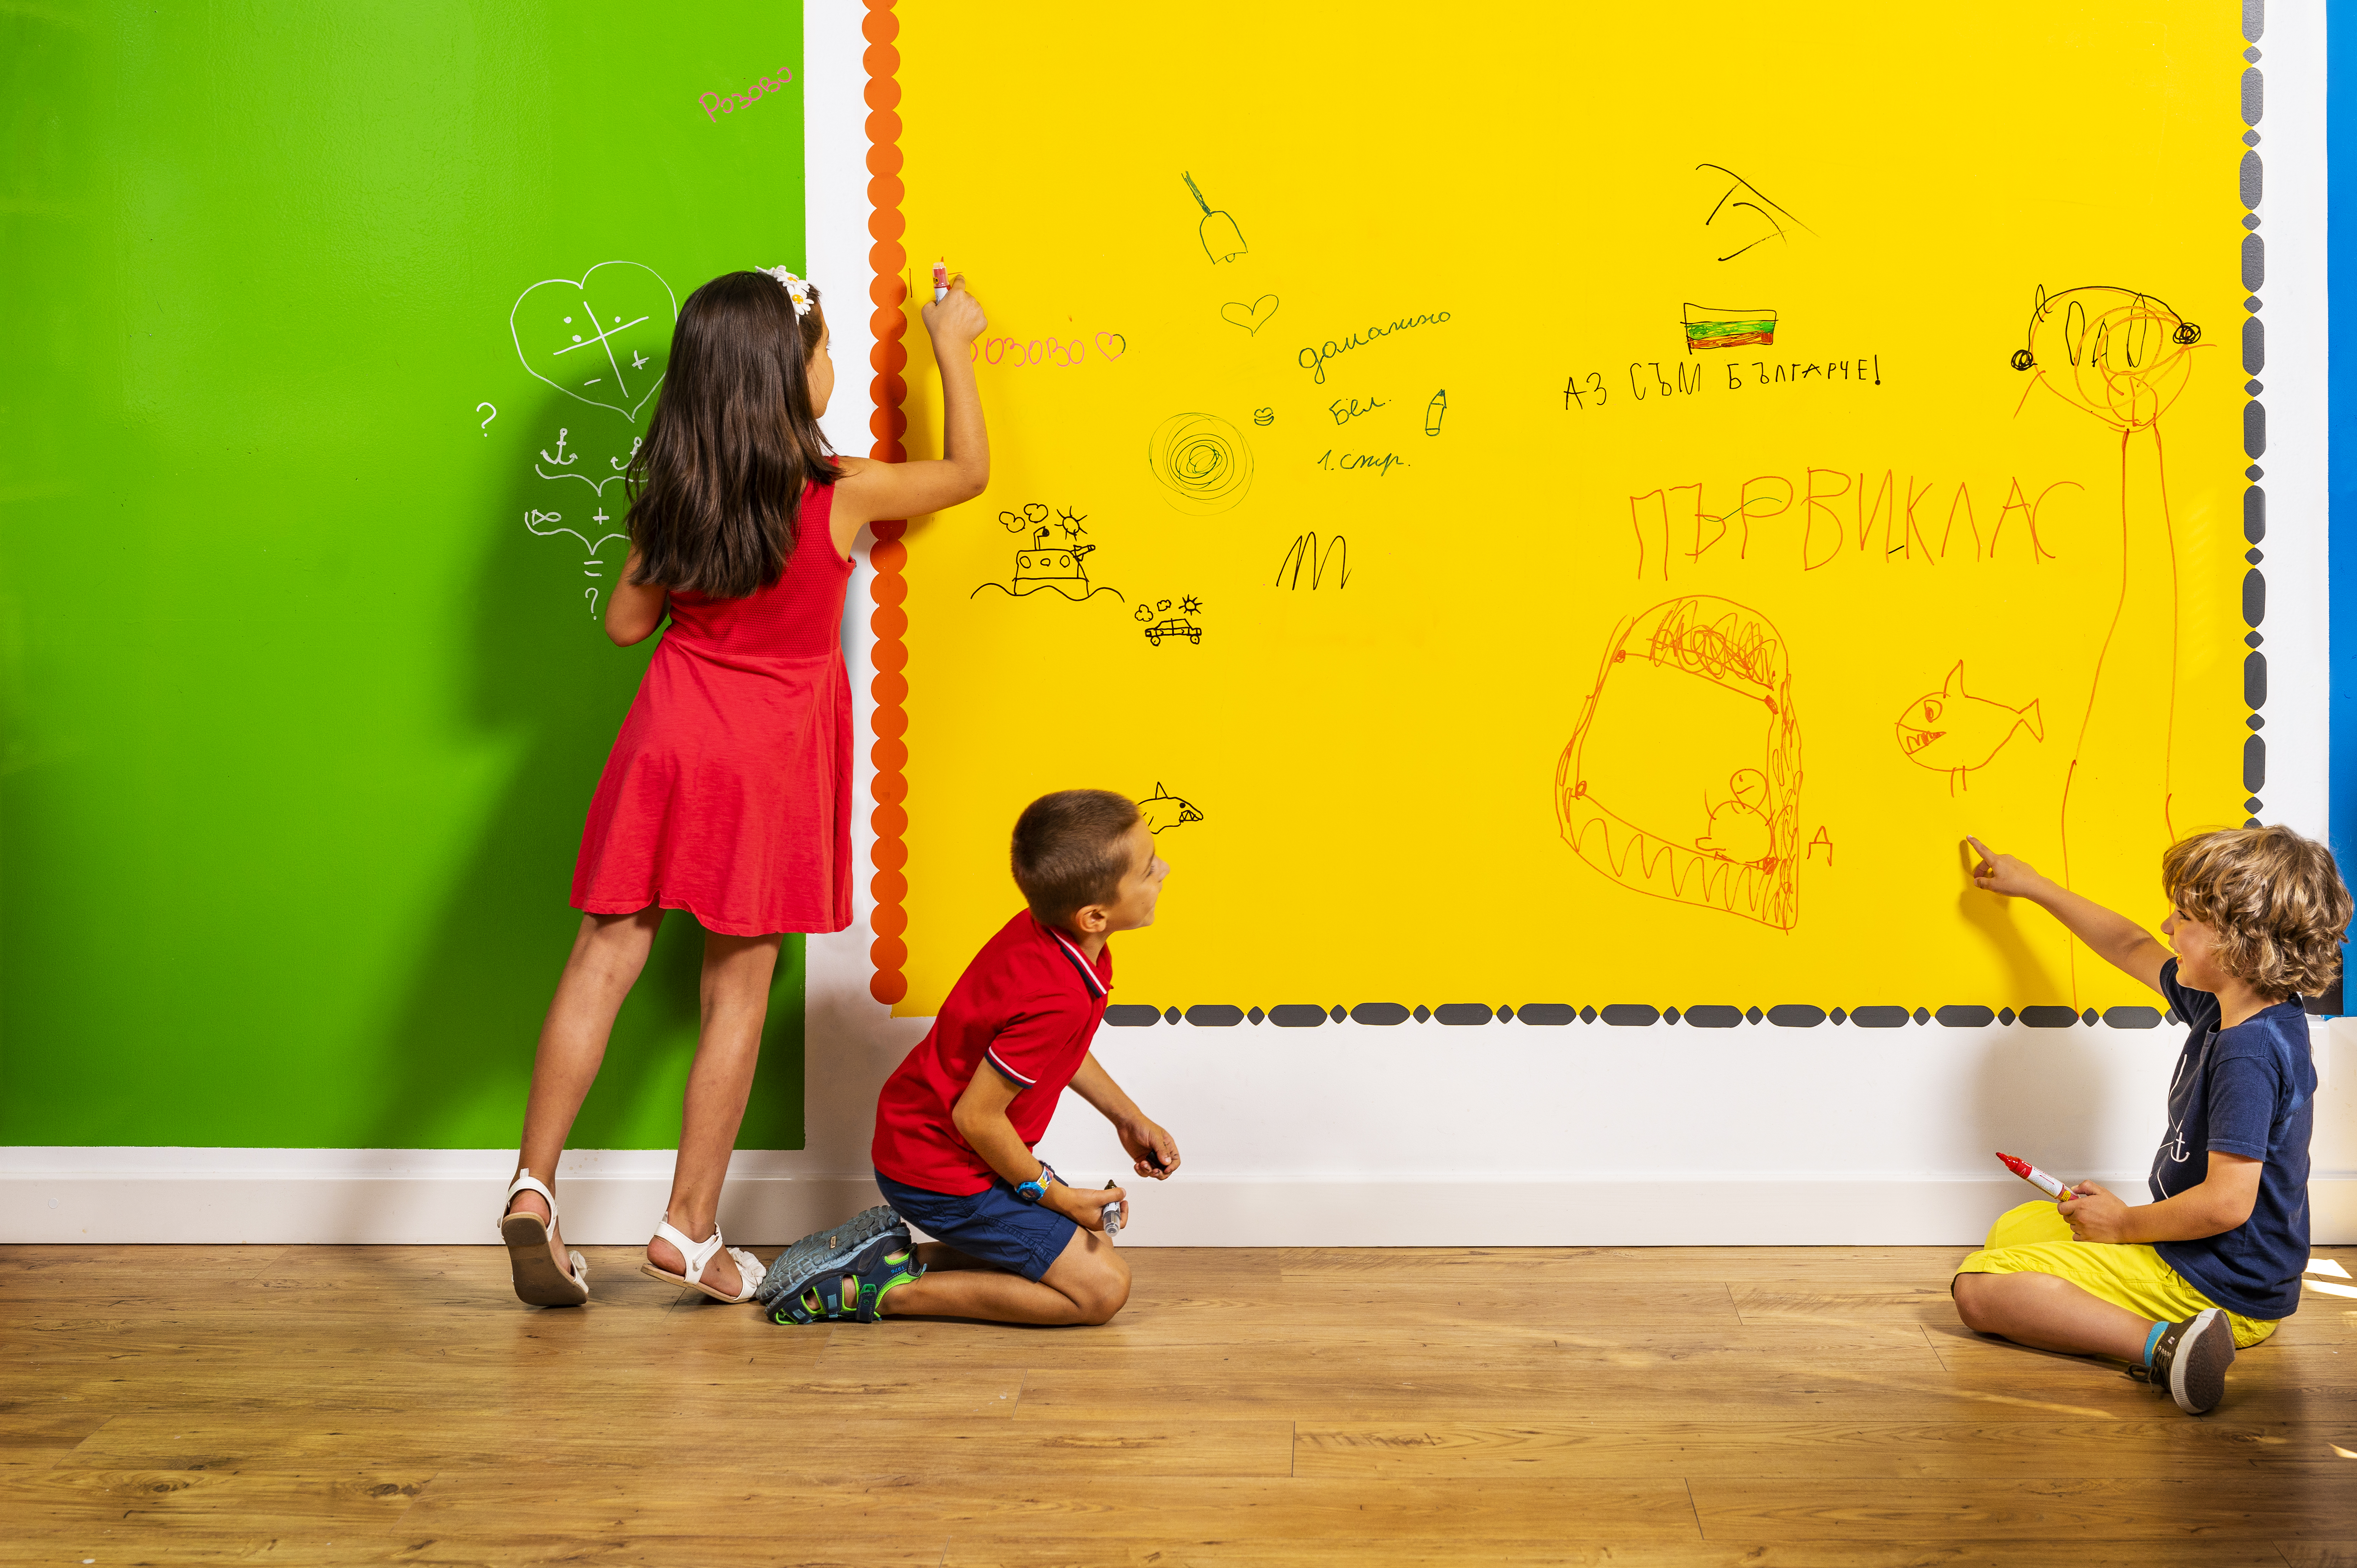 Children Love ESCREO Writable Walls